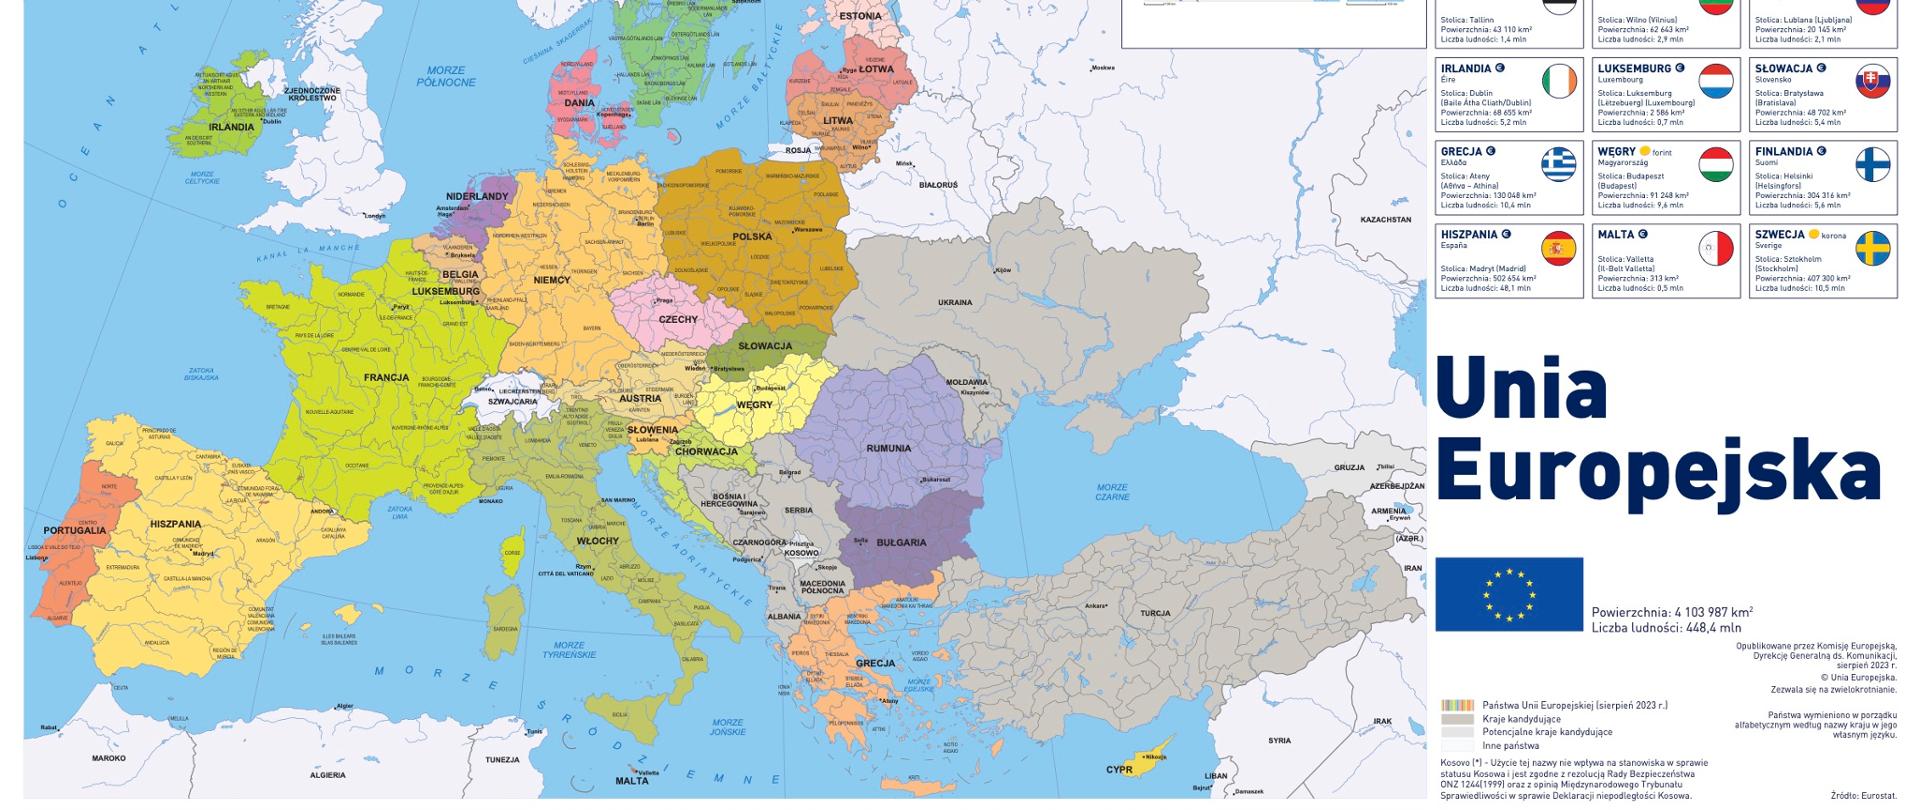 Unia europejska - mapa